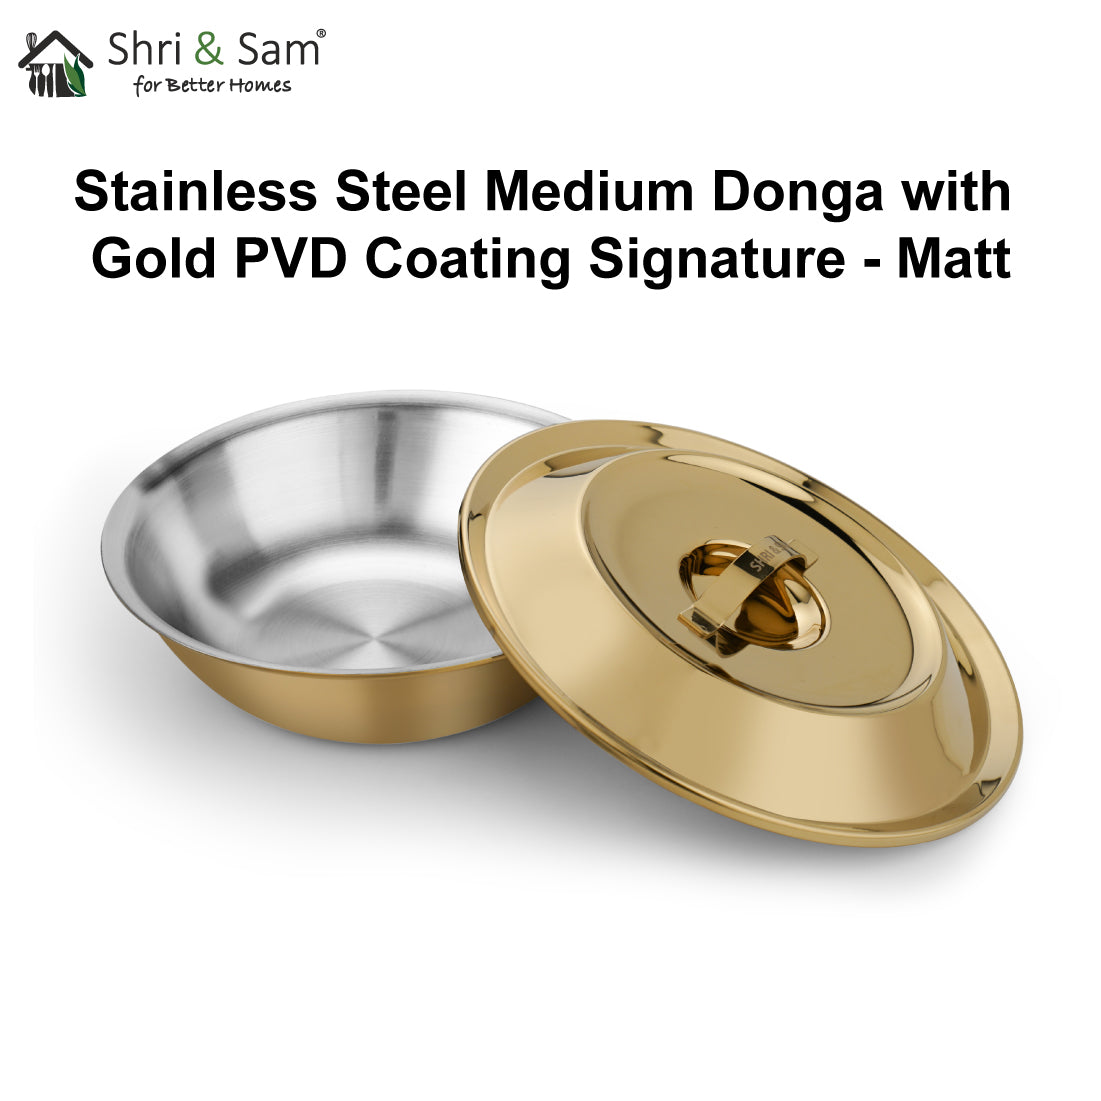 Stainless Steel Medium Donga with Gold PVD Coating Signature - Matt